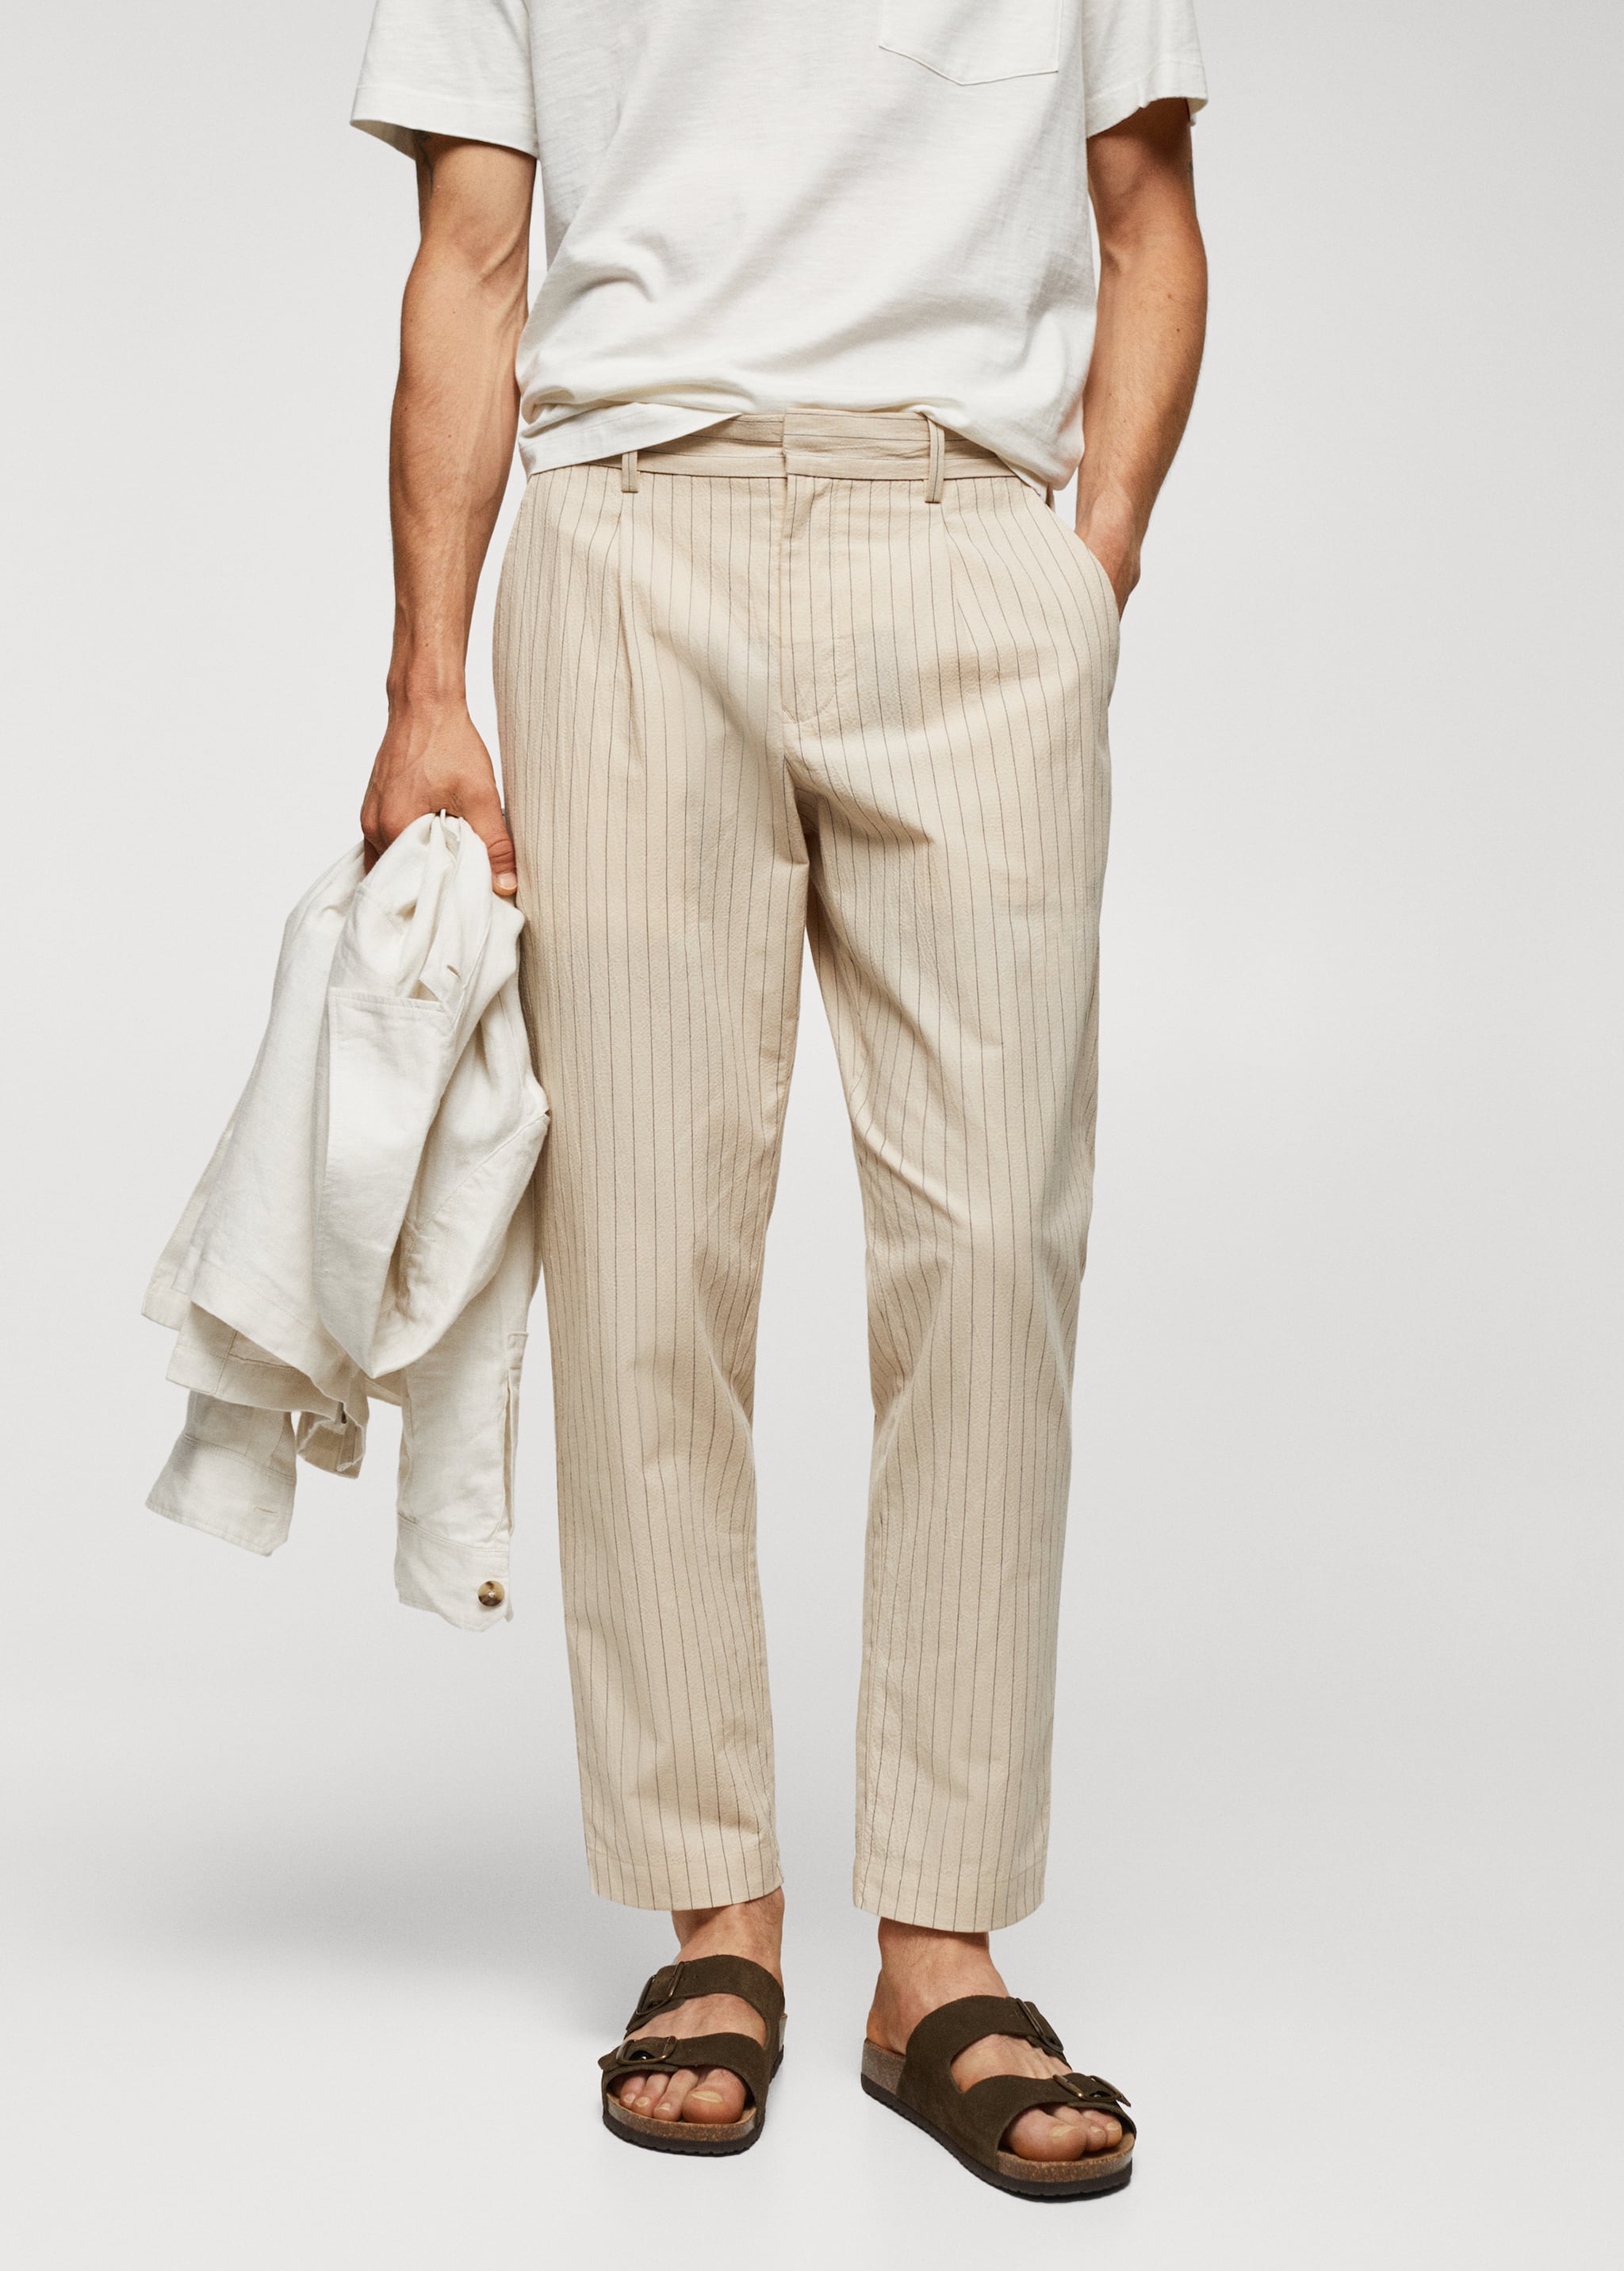 Pantalón algodón-lino seersucker - Plano medio